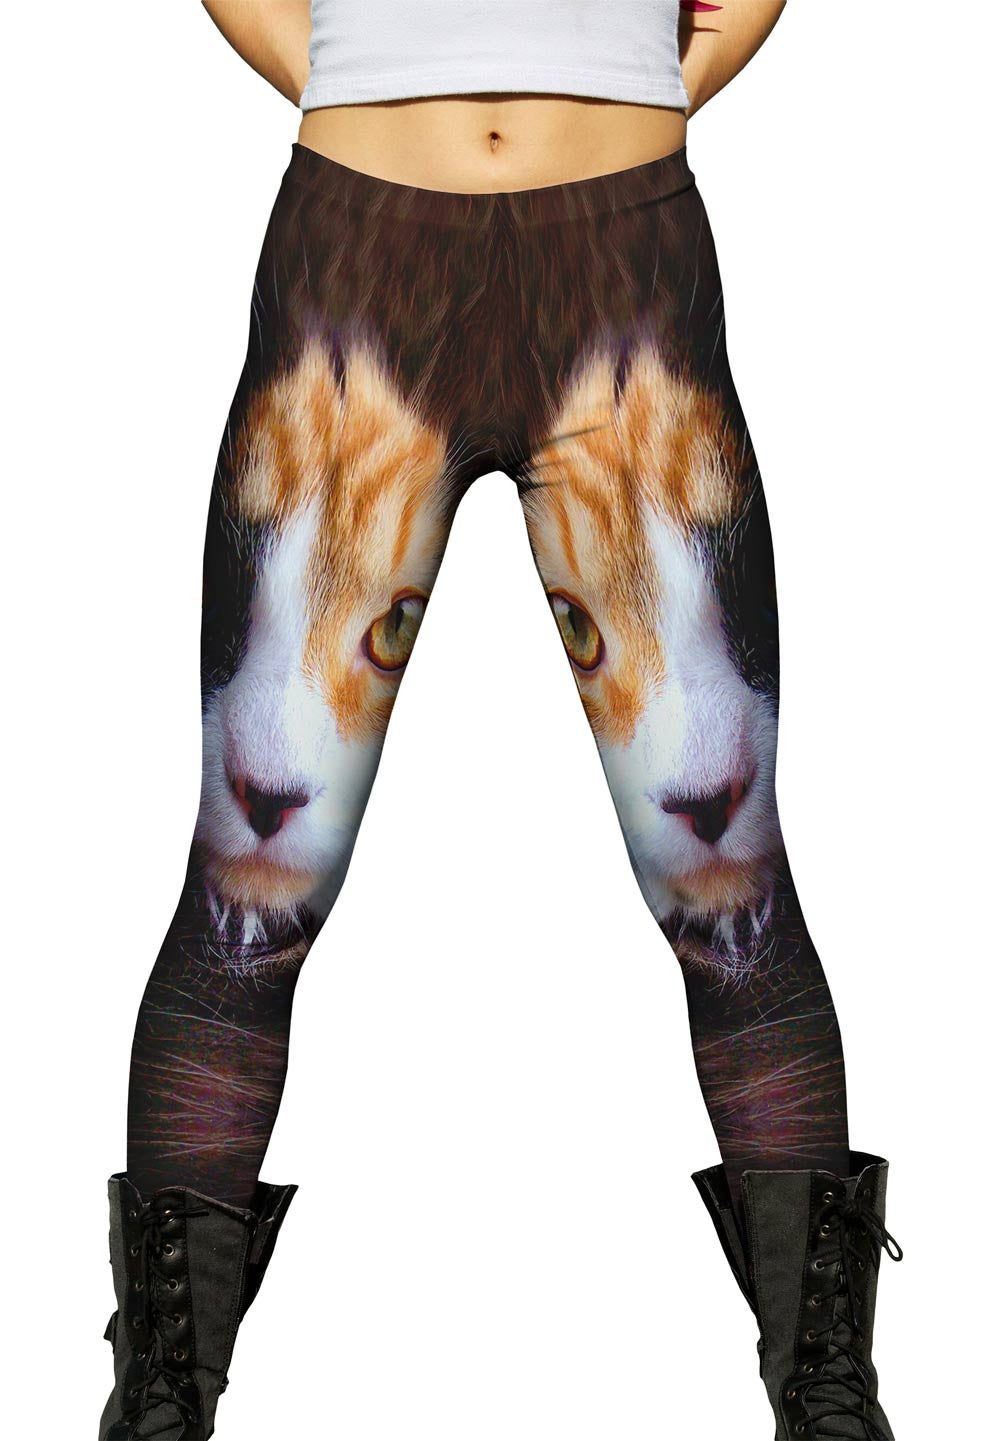 pants women (leggings) SPIRAL - CAT'S TEARS - Black - D070G456 -  Metal-shop.eu